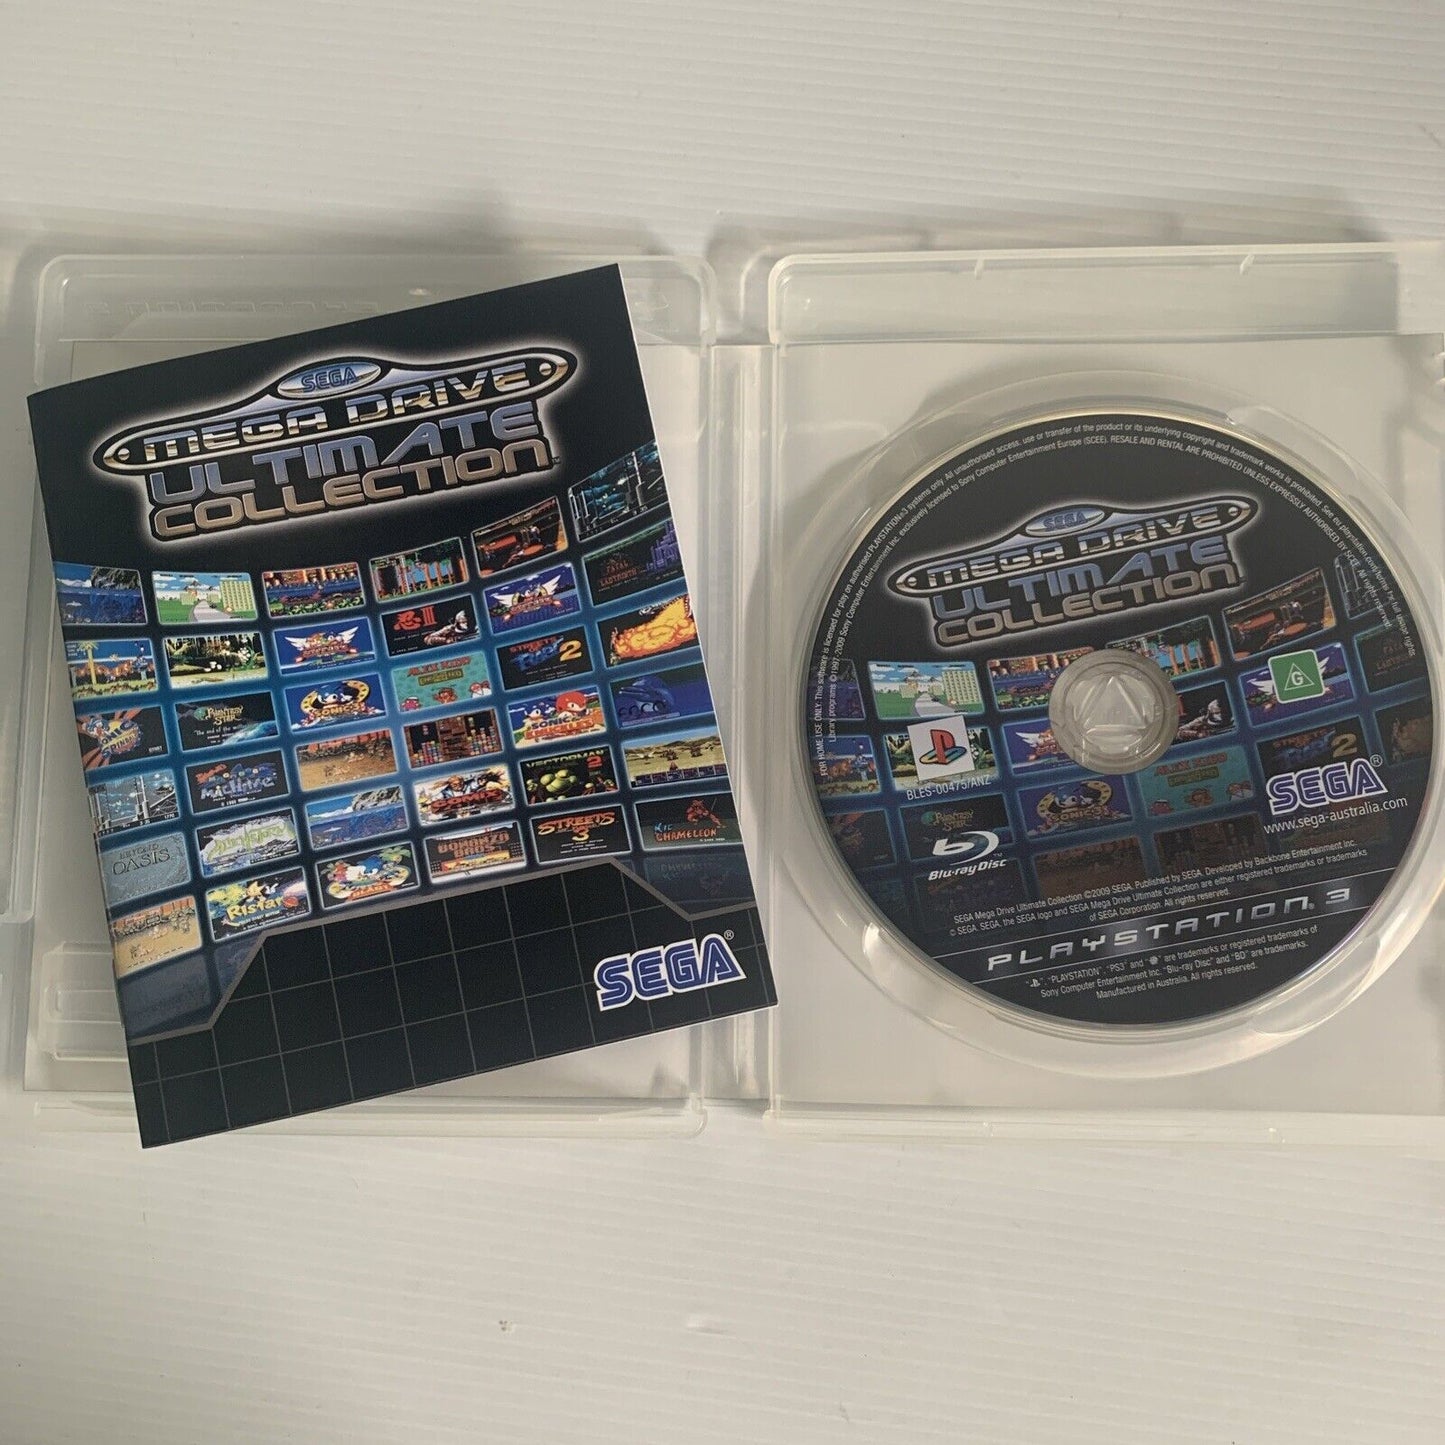 Sega Mega Drive Ultimate Collection PlayStation 3 PS3 Game